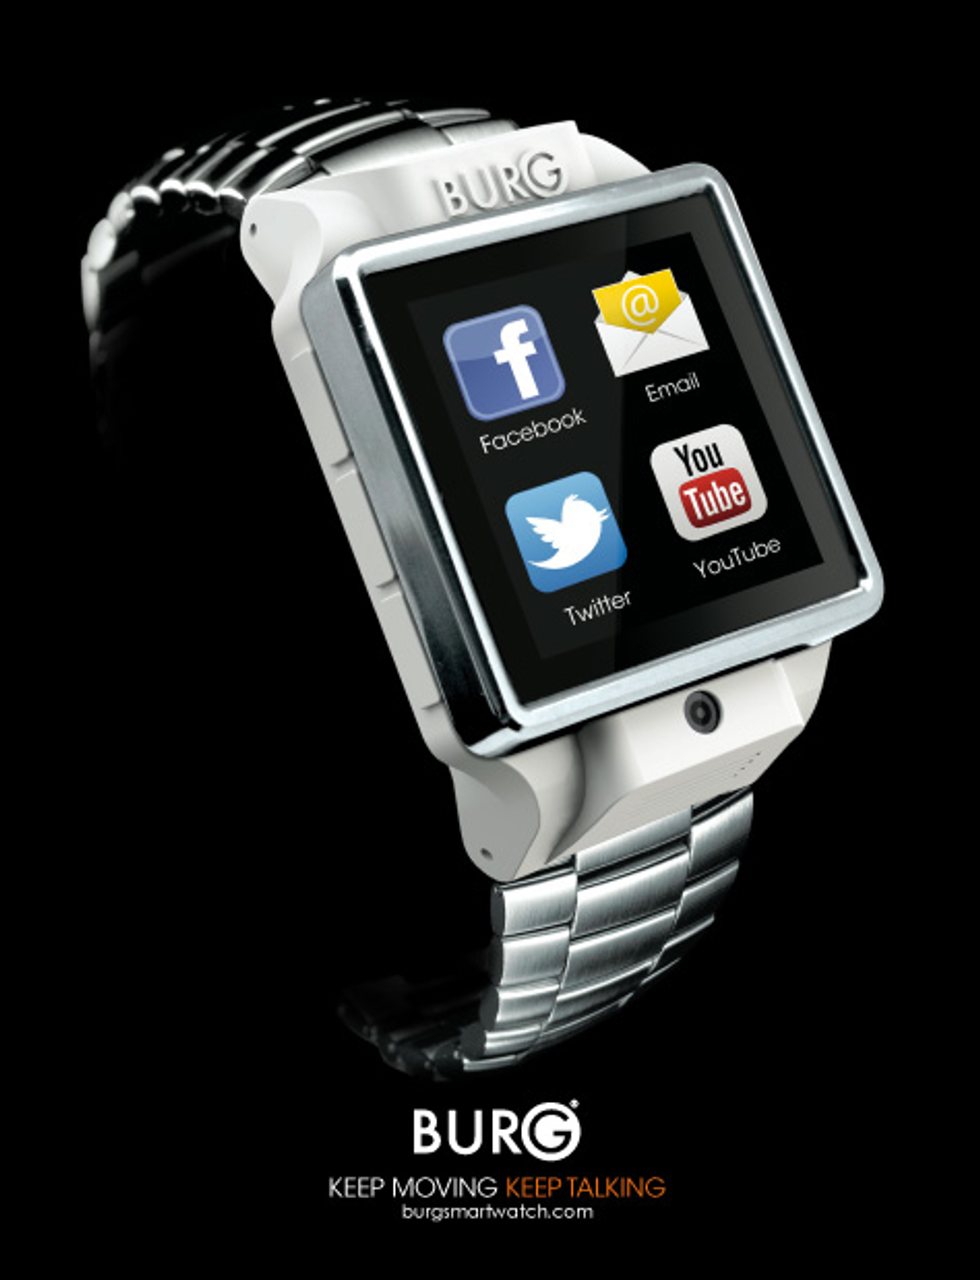 Burg17: lo smartwatch che telefona